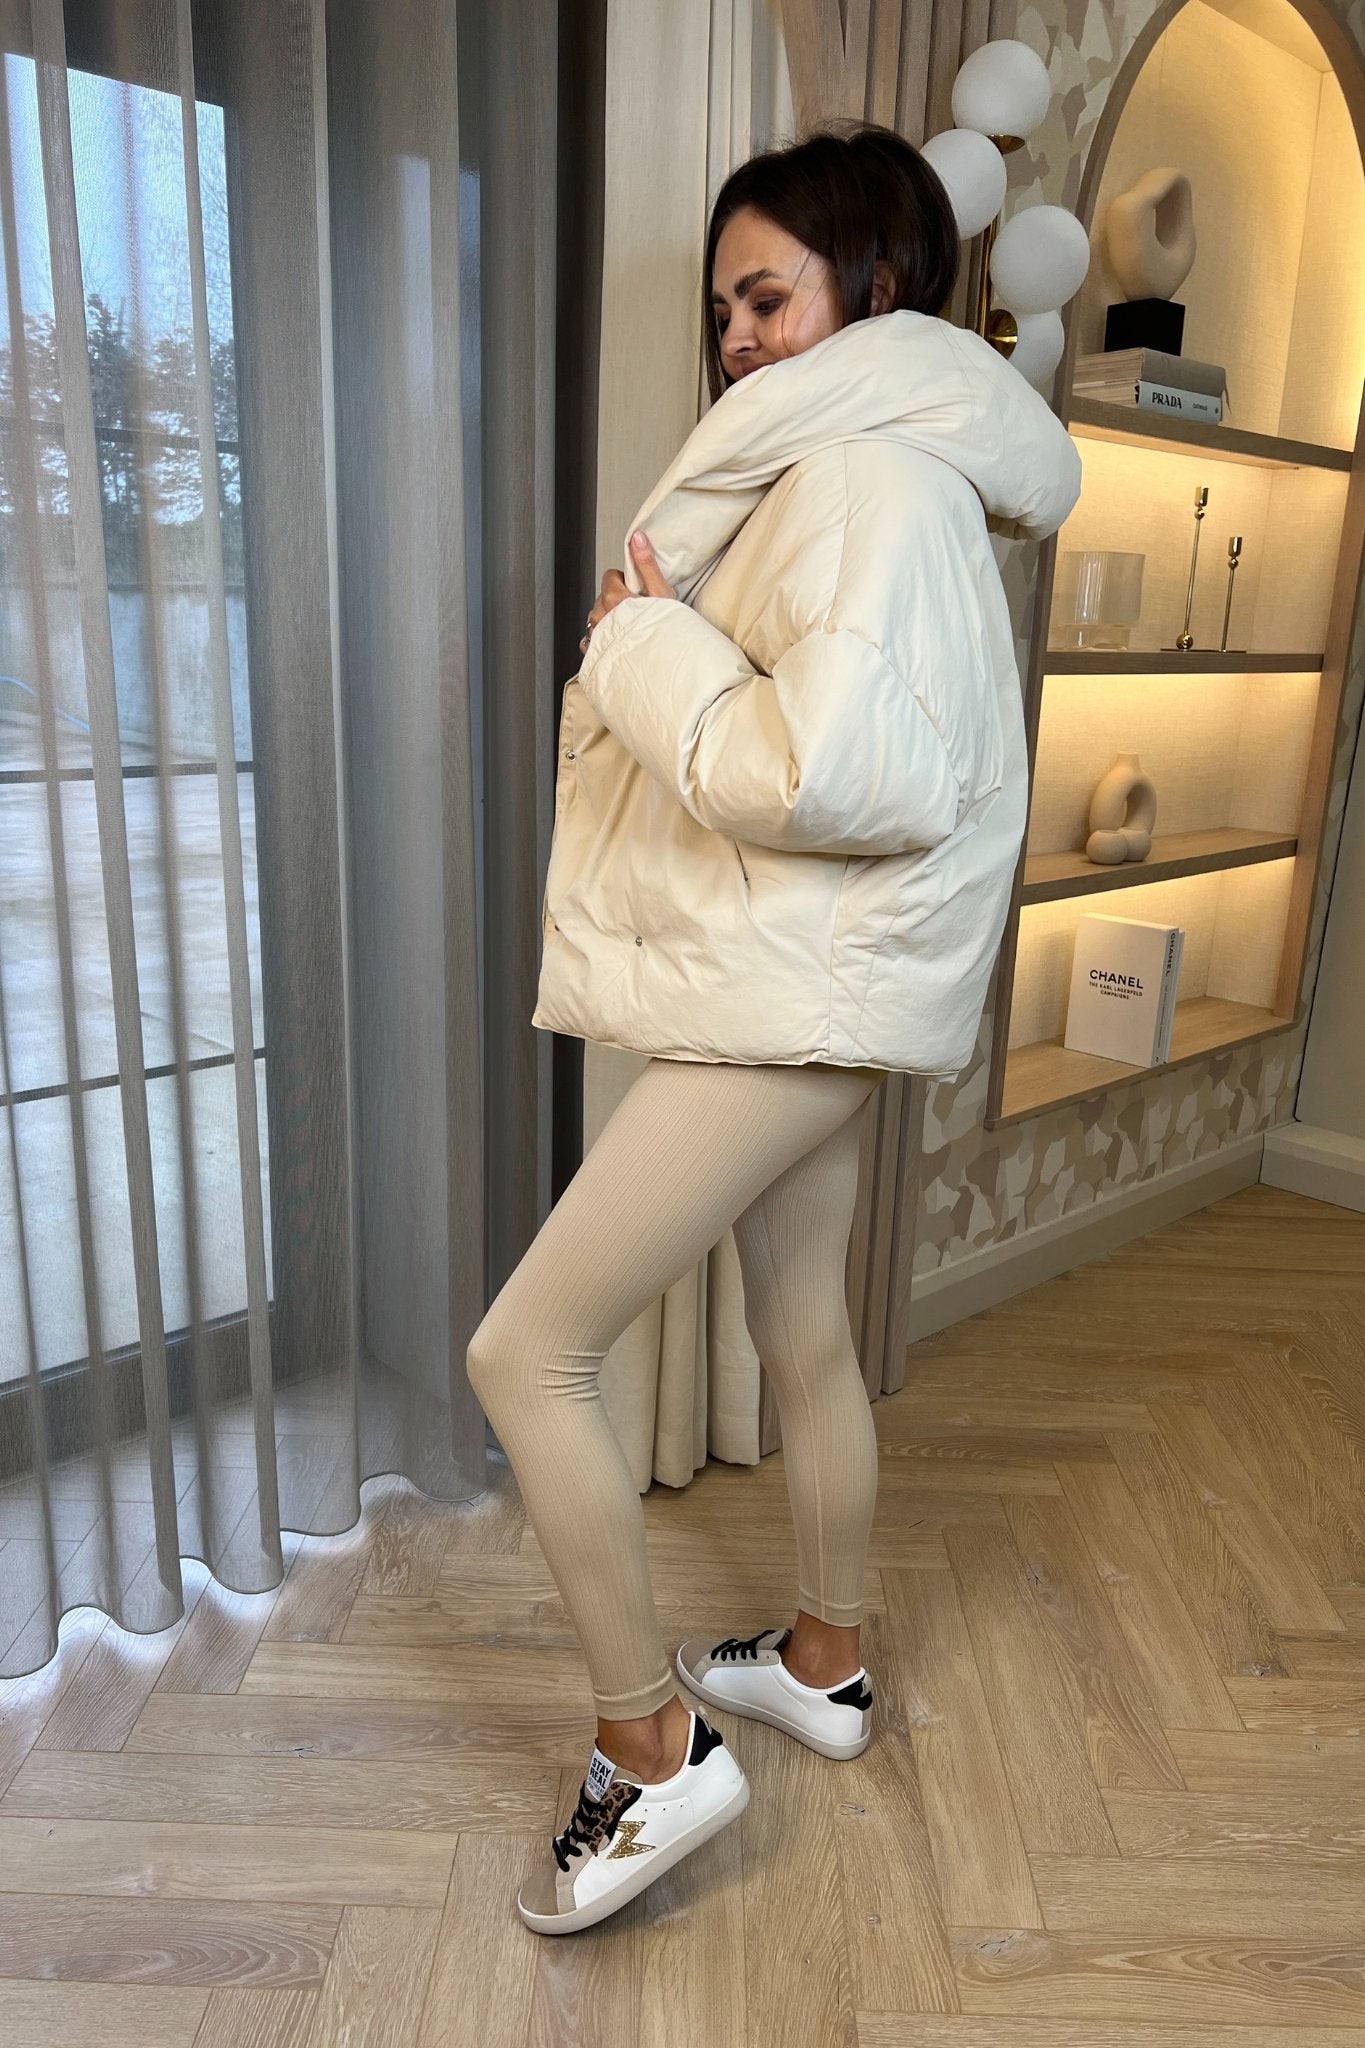 Cora Hooded Coat In Cream - The Walk in Wardrobe